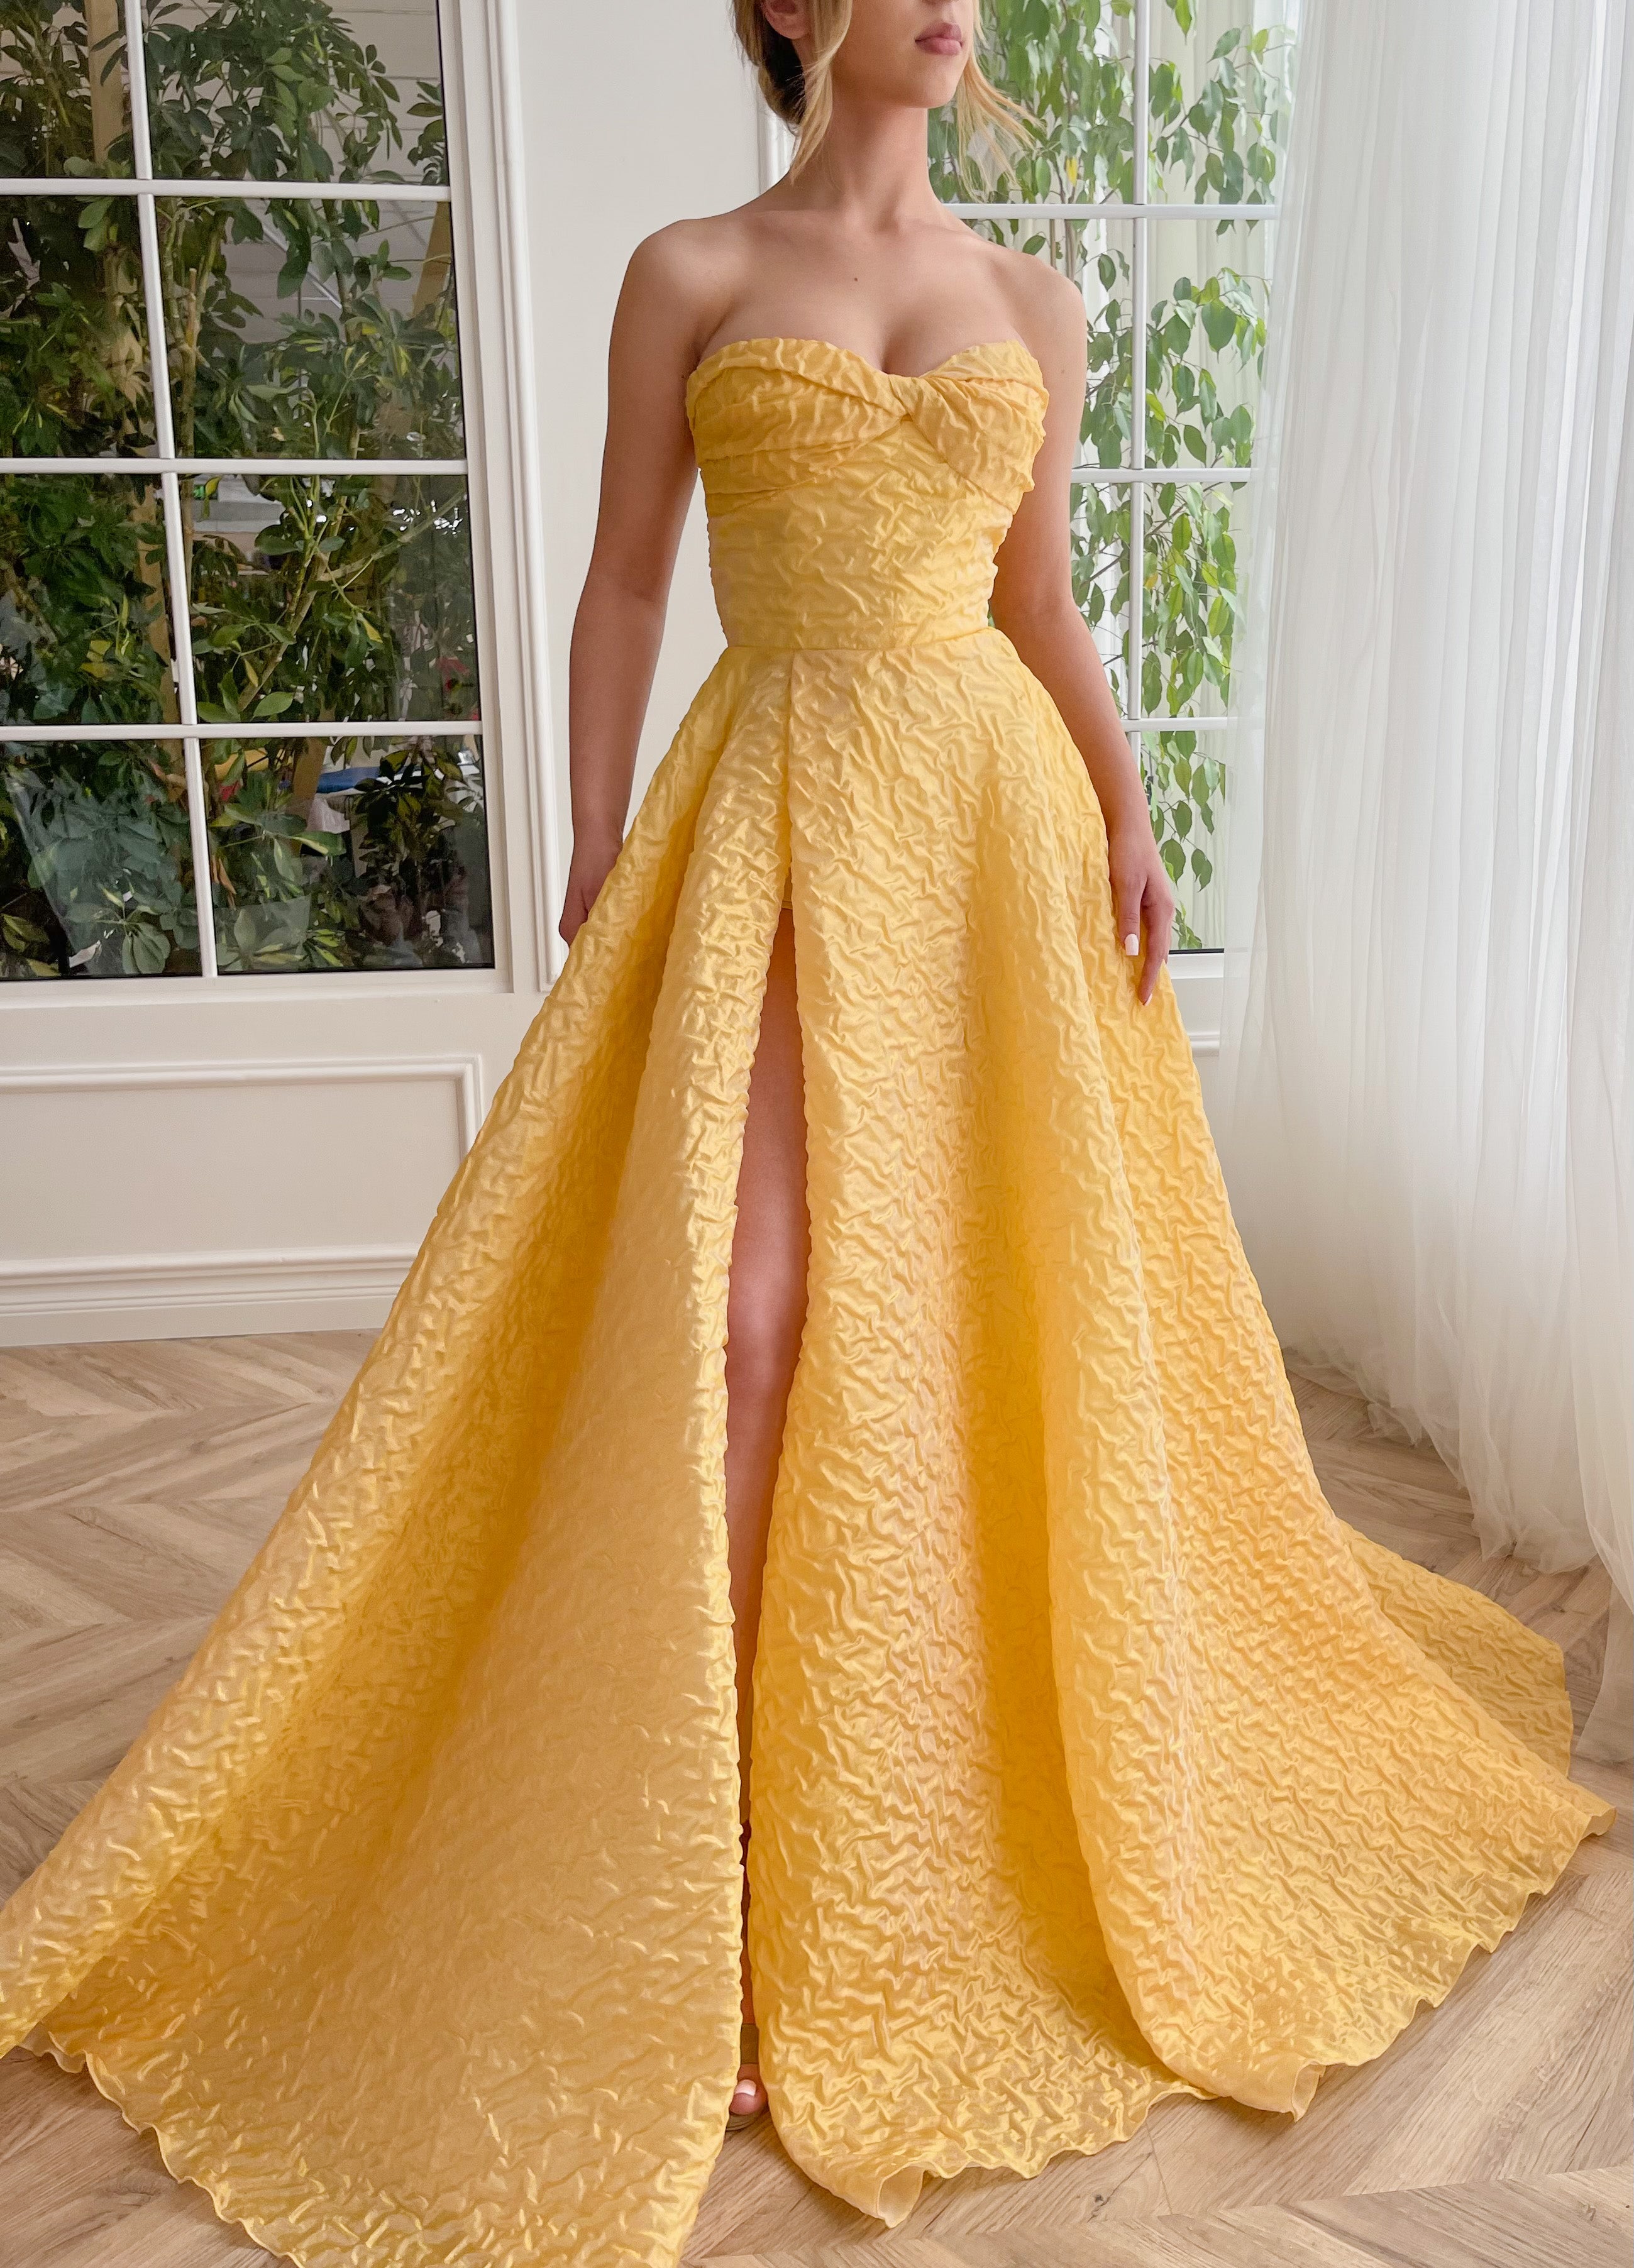 dresses yellow dress